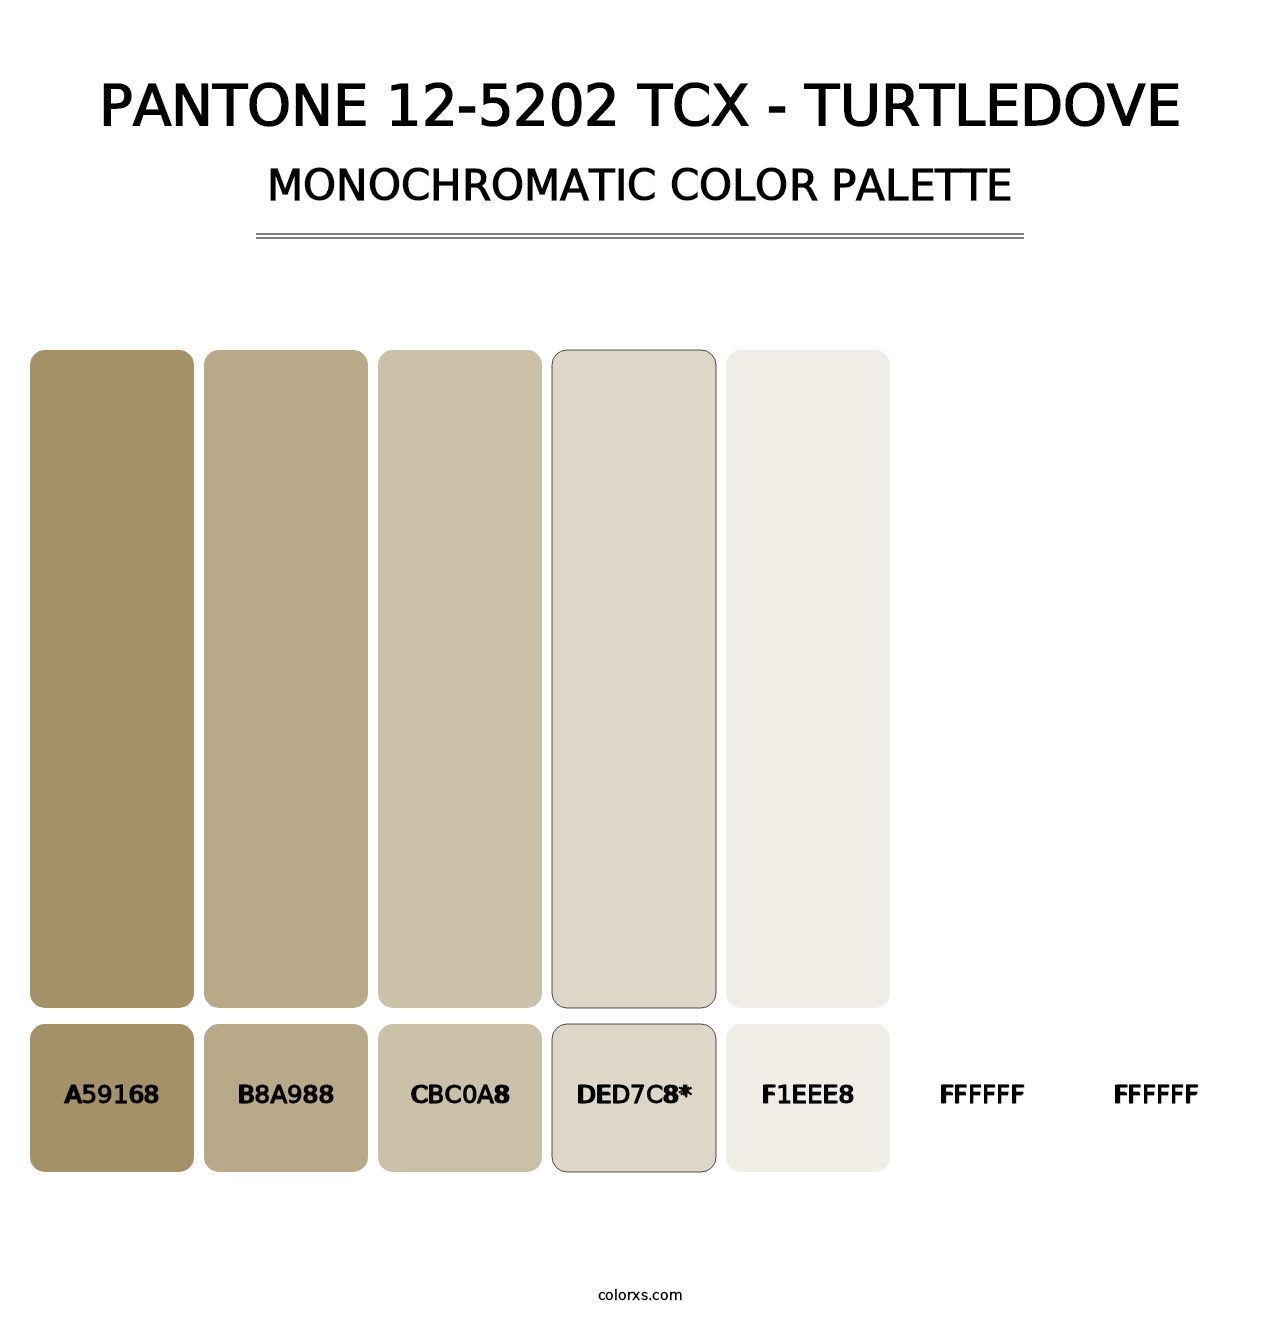 PANTONE 12-5202 TCX - Turtledove - Monochromatic Color Palette